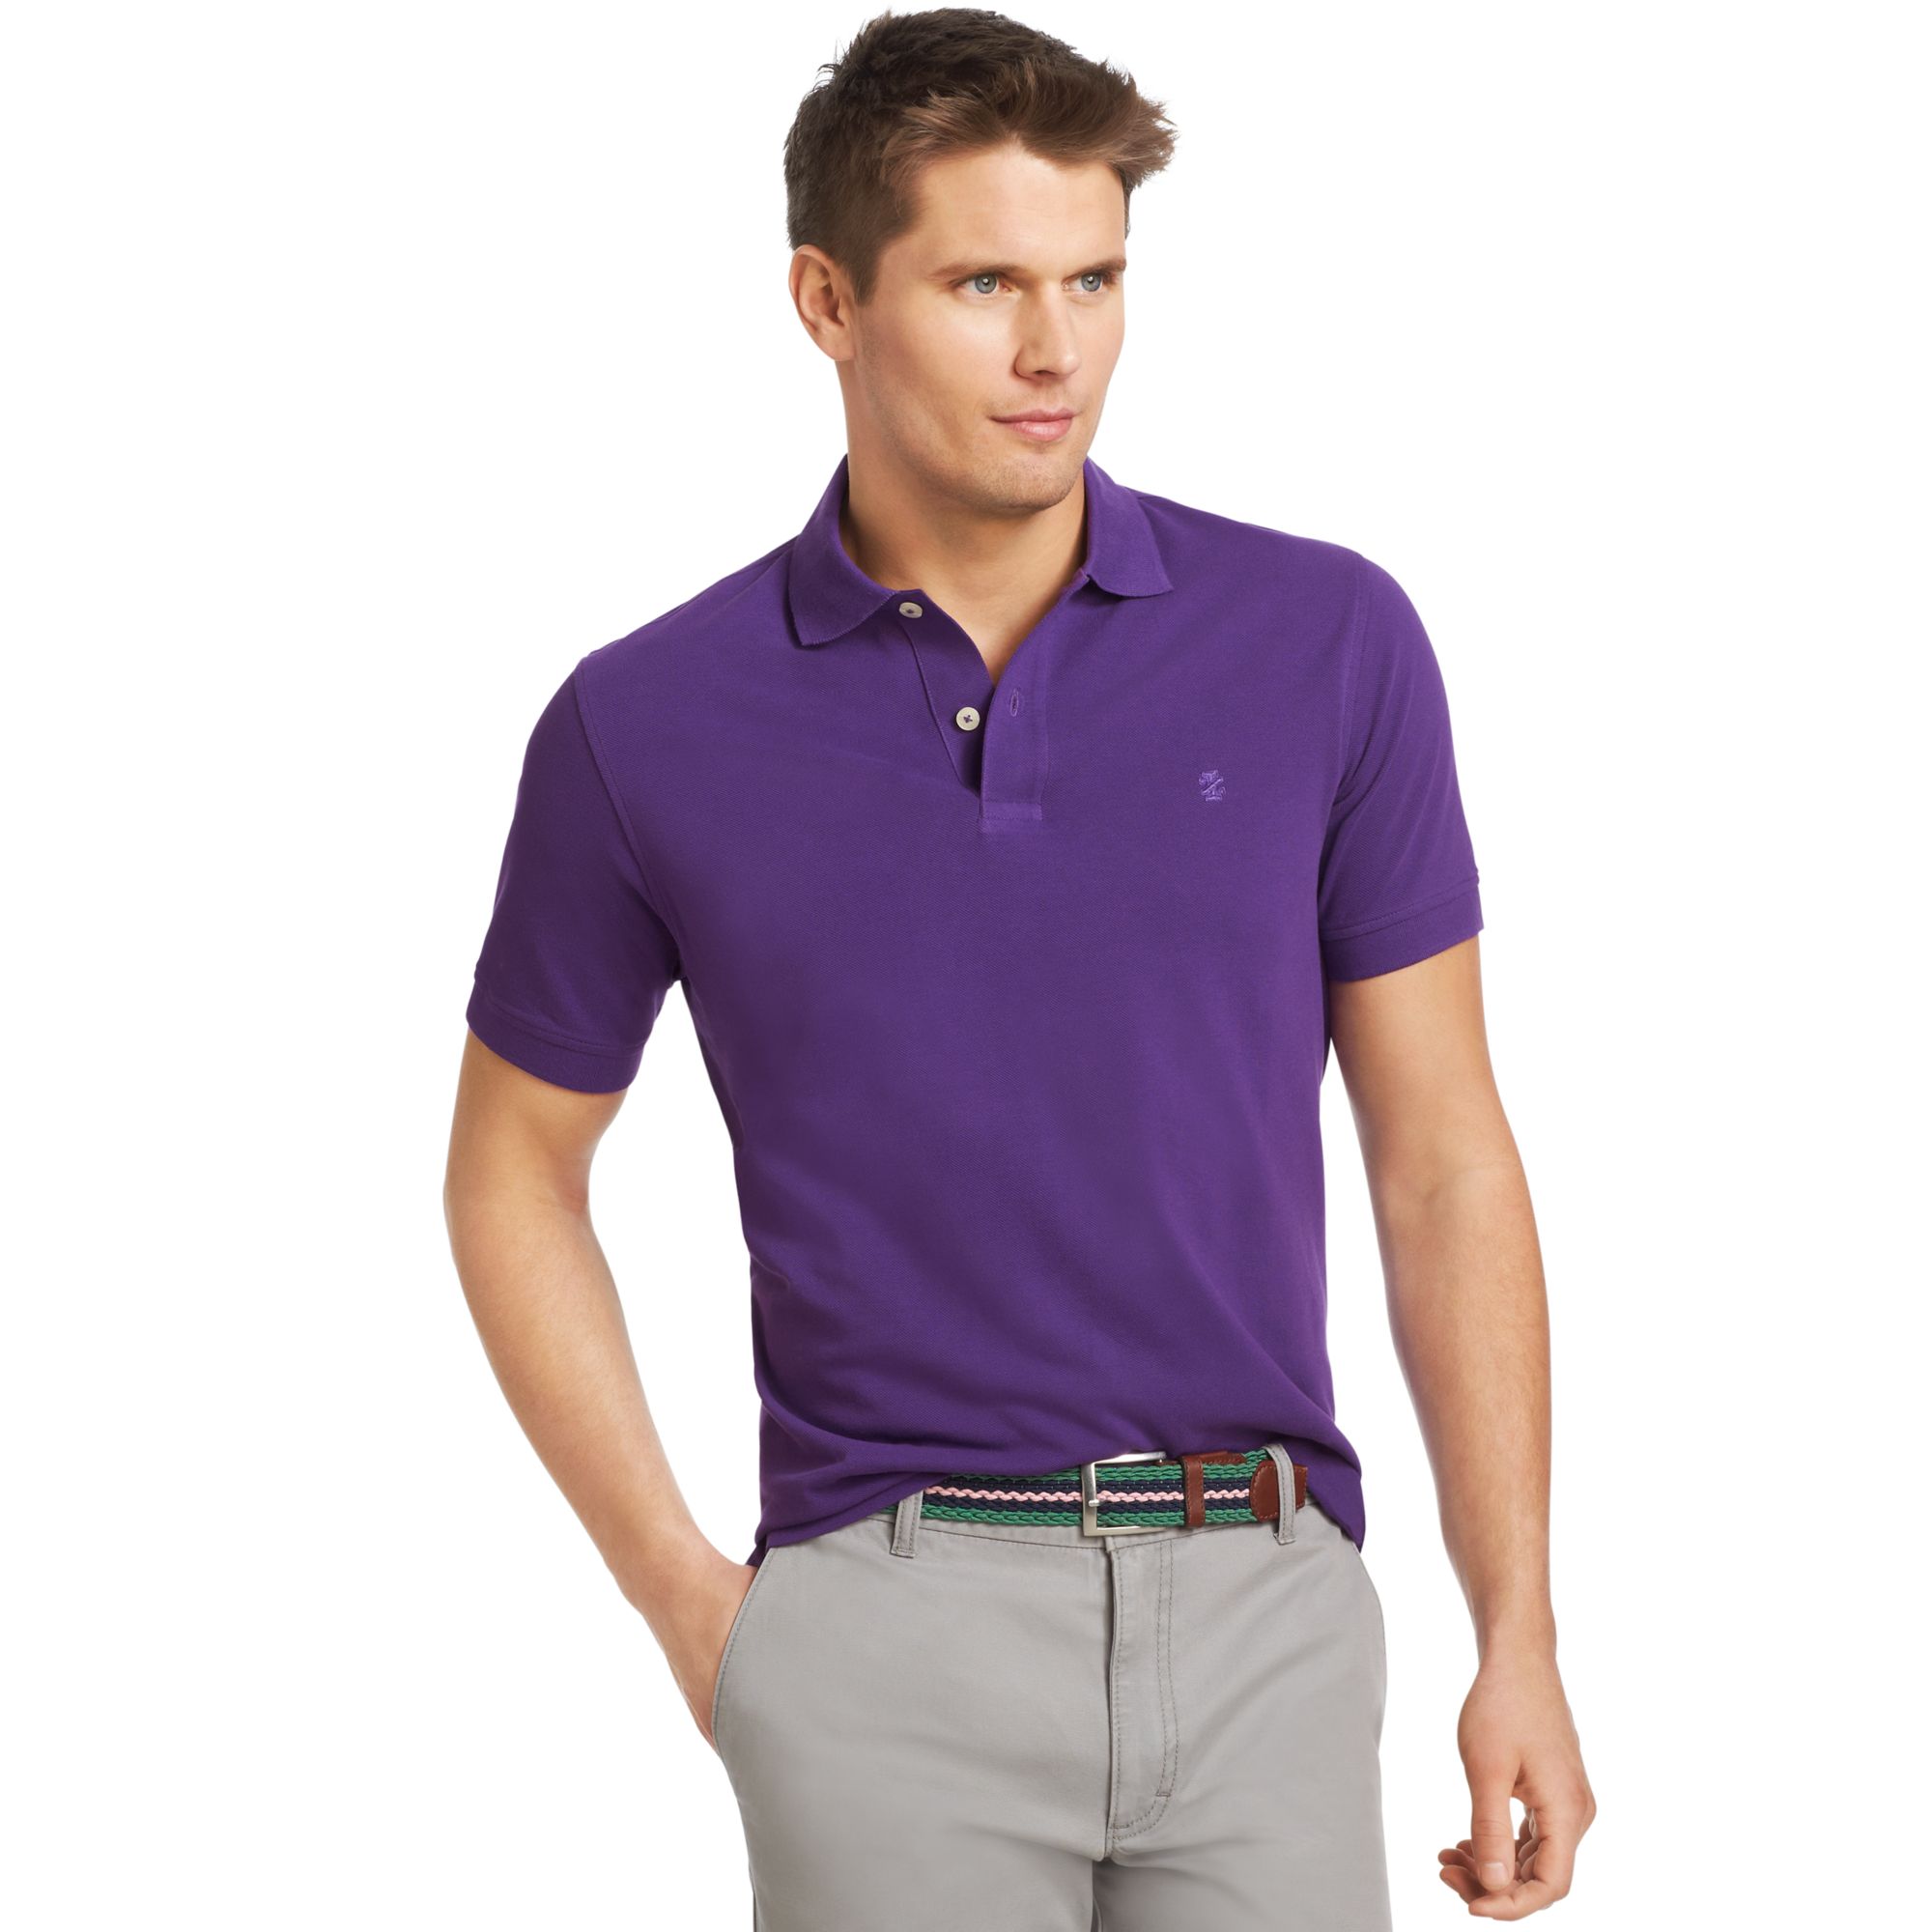 Lyst - Izod Shirt Premium Pique Polo Shirt in Purple for Men